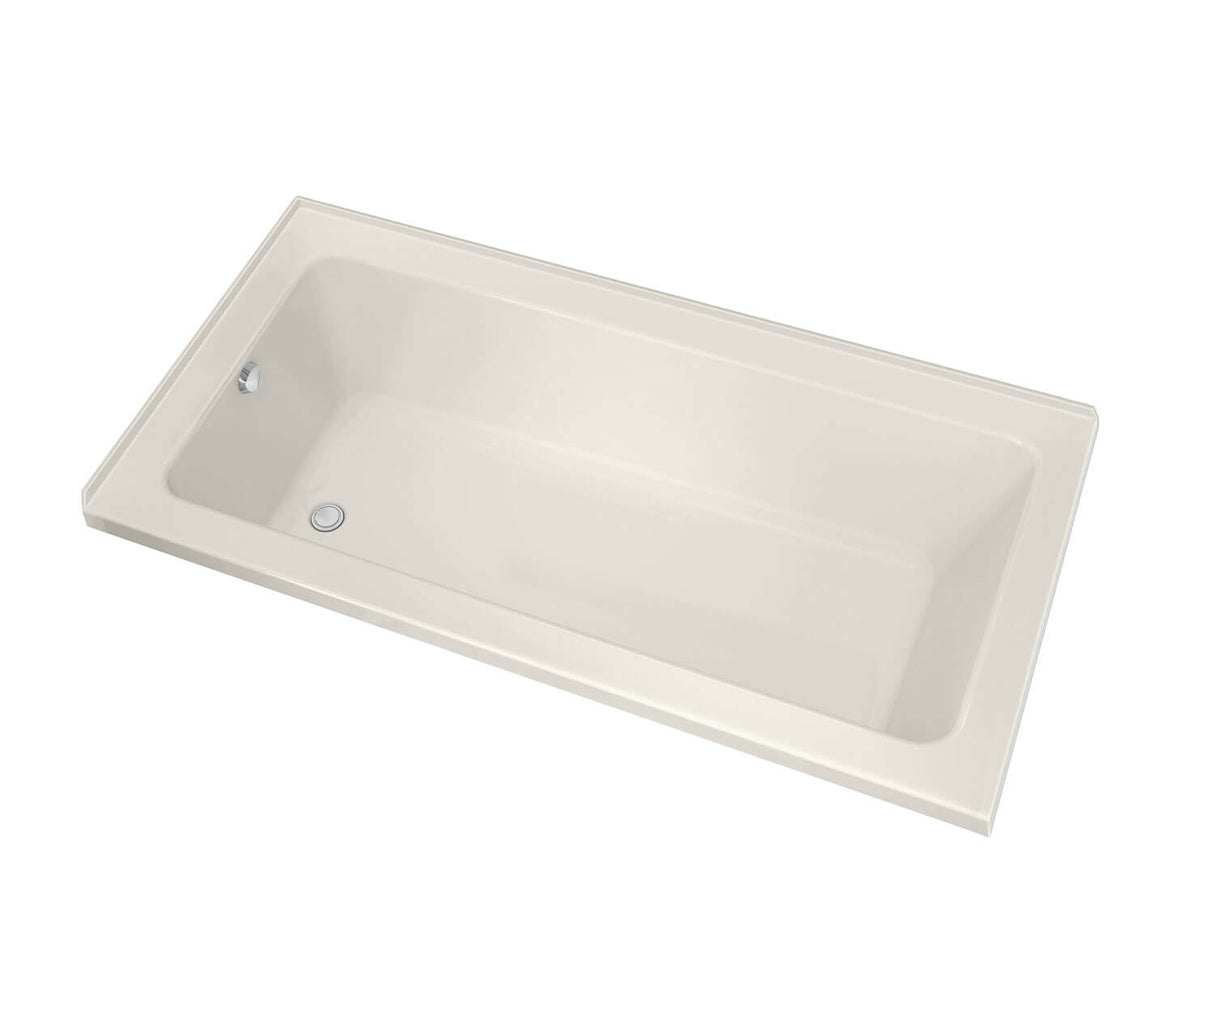 MAAX 106208-L-003-007 Pose 6636 IF Acrylic Corner Left Left-Hand Drain Whirlpool Bathtub in Biscuit